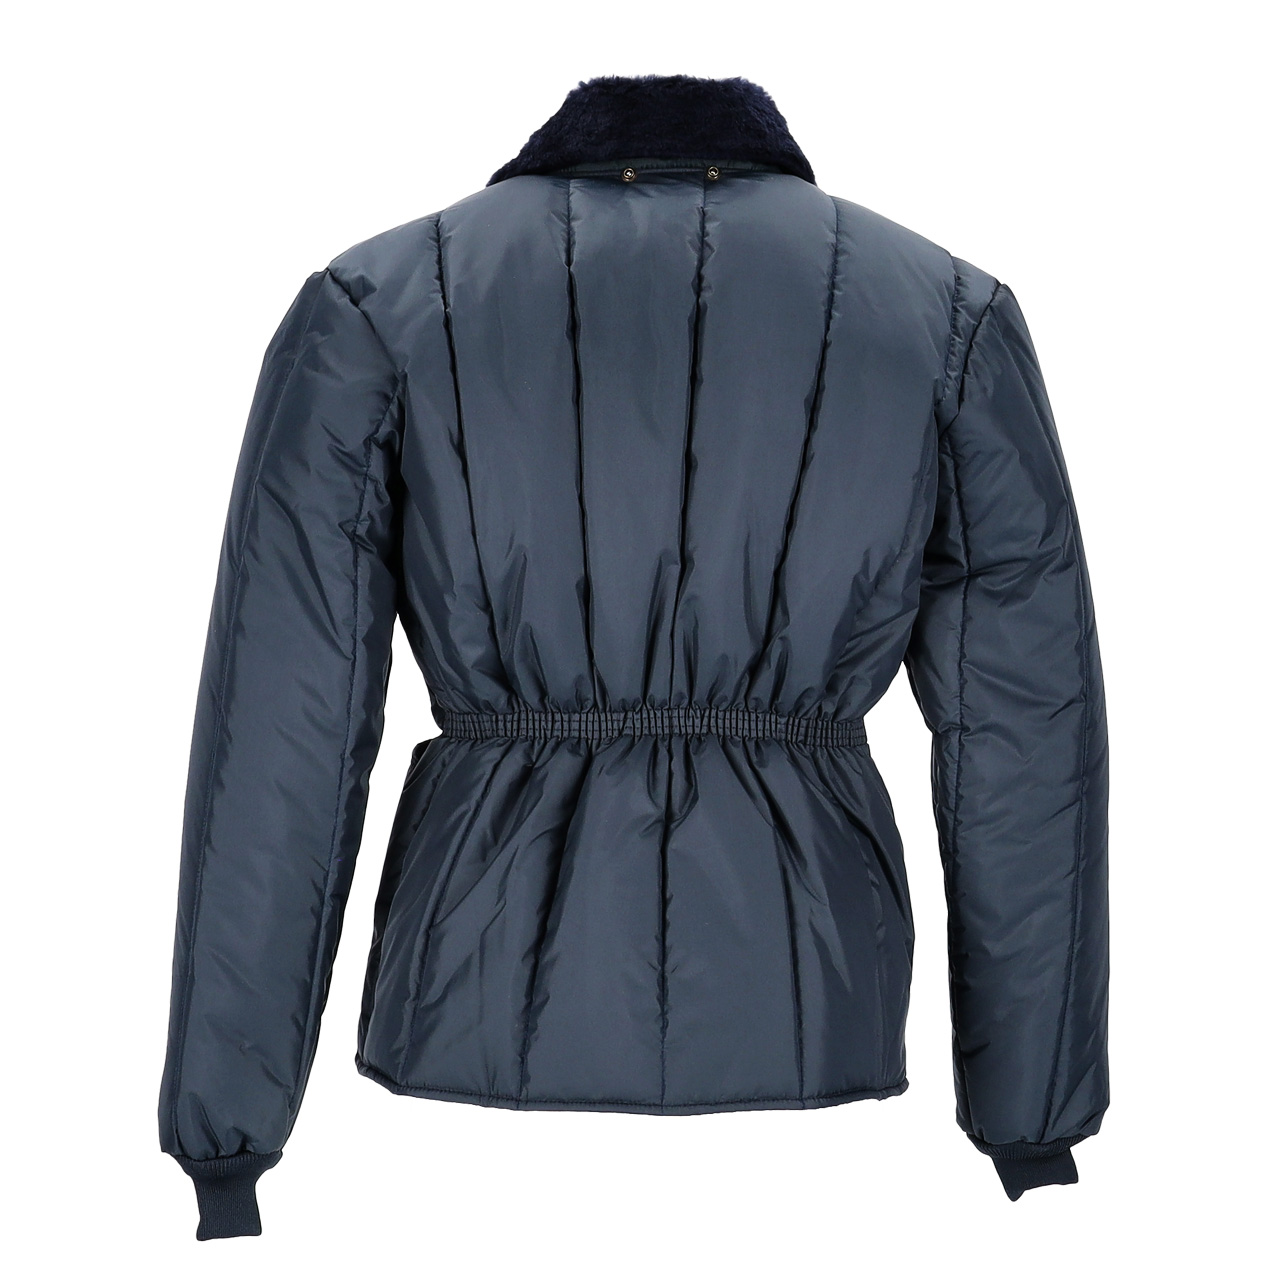 https://www.freezerwear.com/resize/Shared/Images/Product/F700J-Lightweight-Freezer-Jacket/Samco_clothing_0052_F700J_back.jpg?bw=1000&w=1000&bh=1000&h=1000